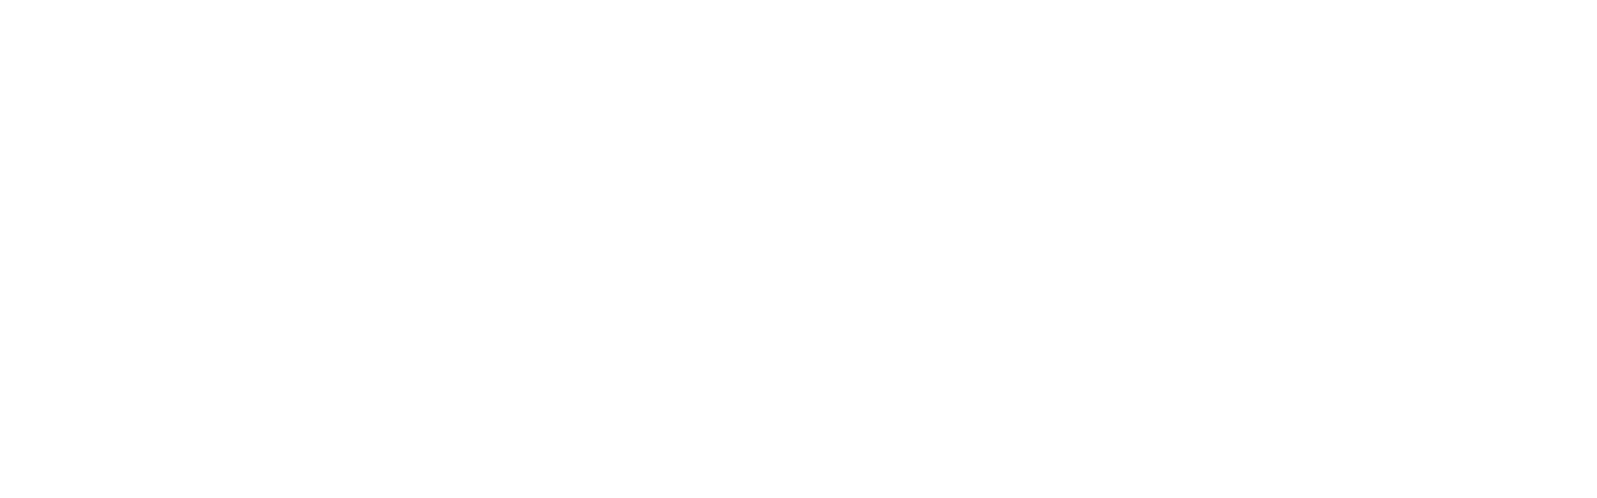 HPE GreenLake Day 2024, Tokyo